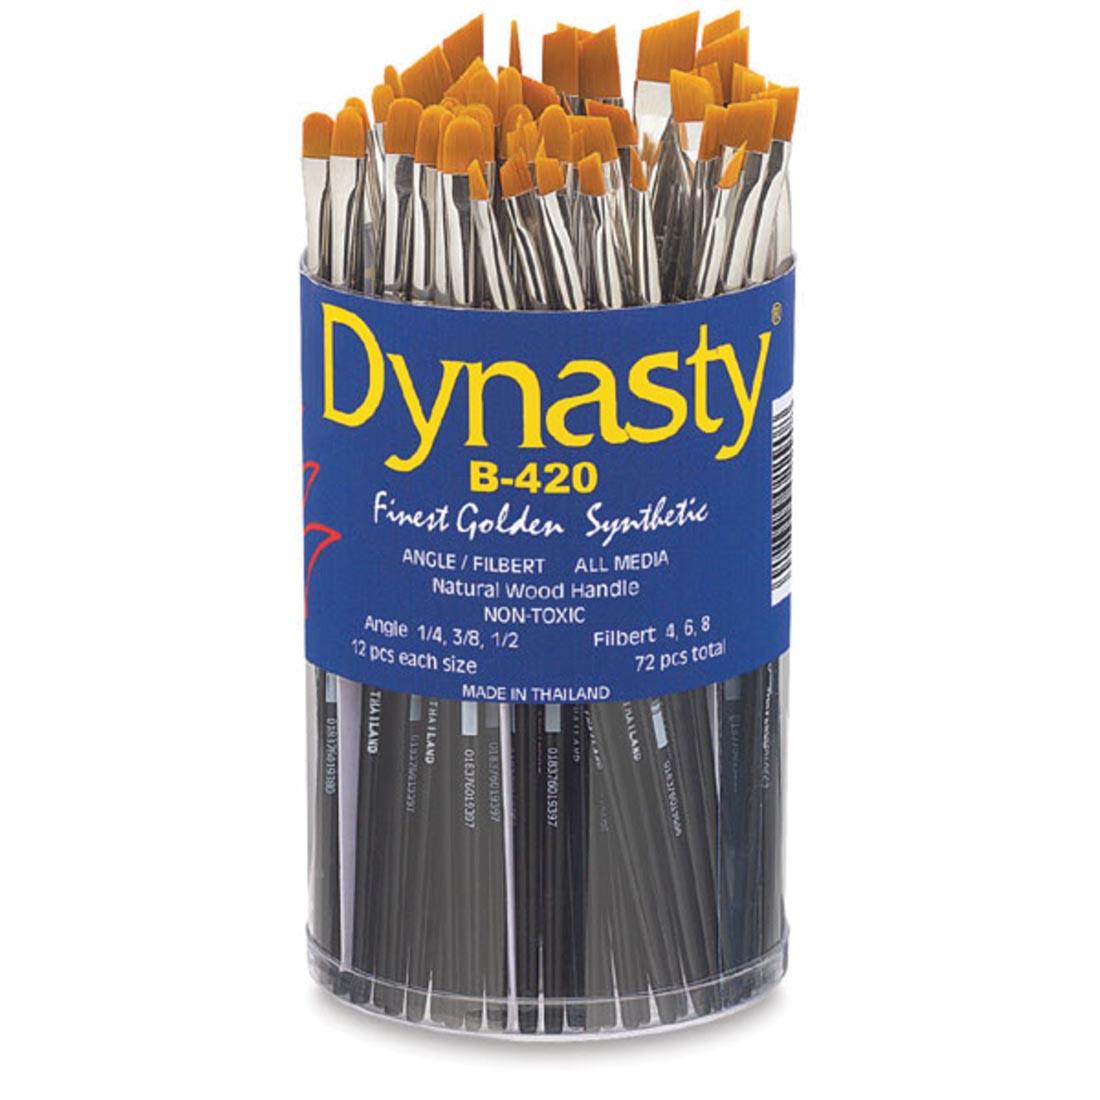 Dynasty Finest Golden Synthetic Brush Assortment